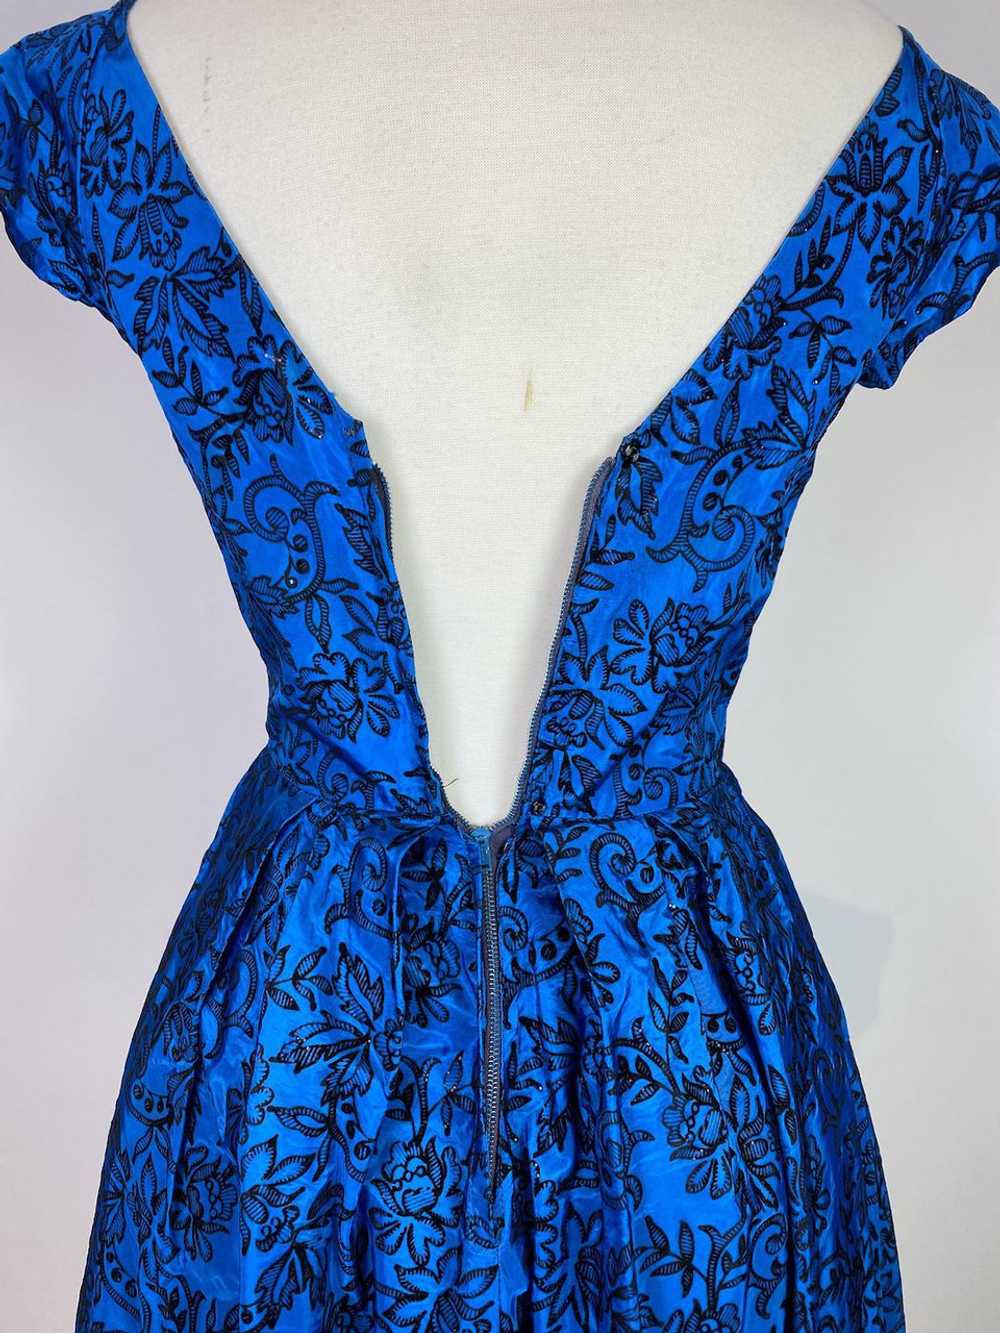 1950s Blue Floral Velvet Party Dress - image 7